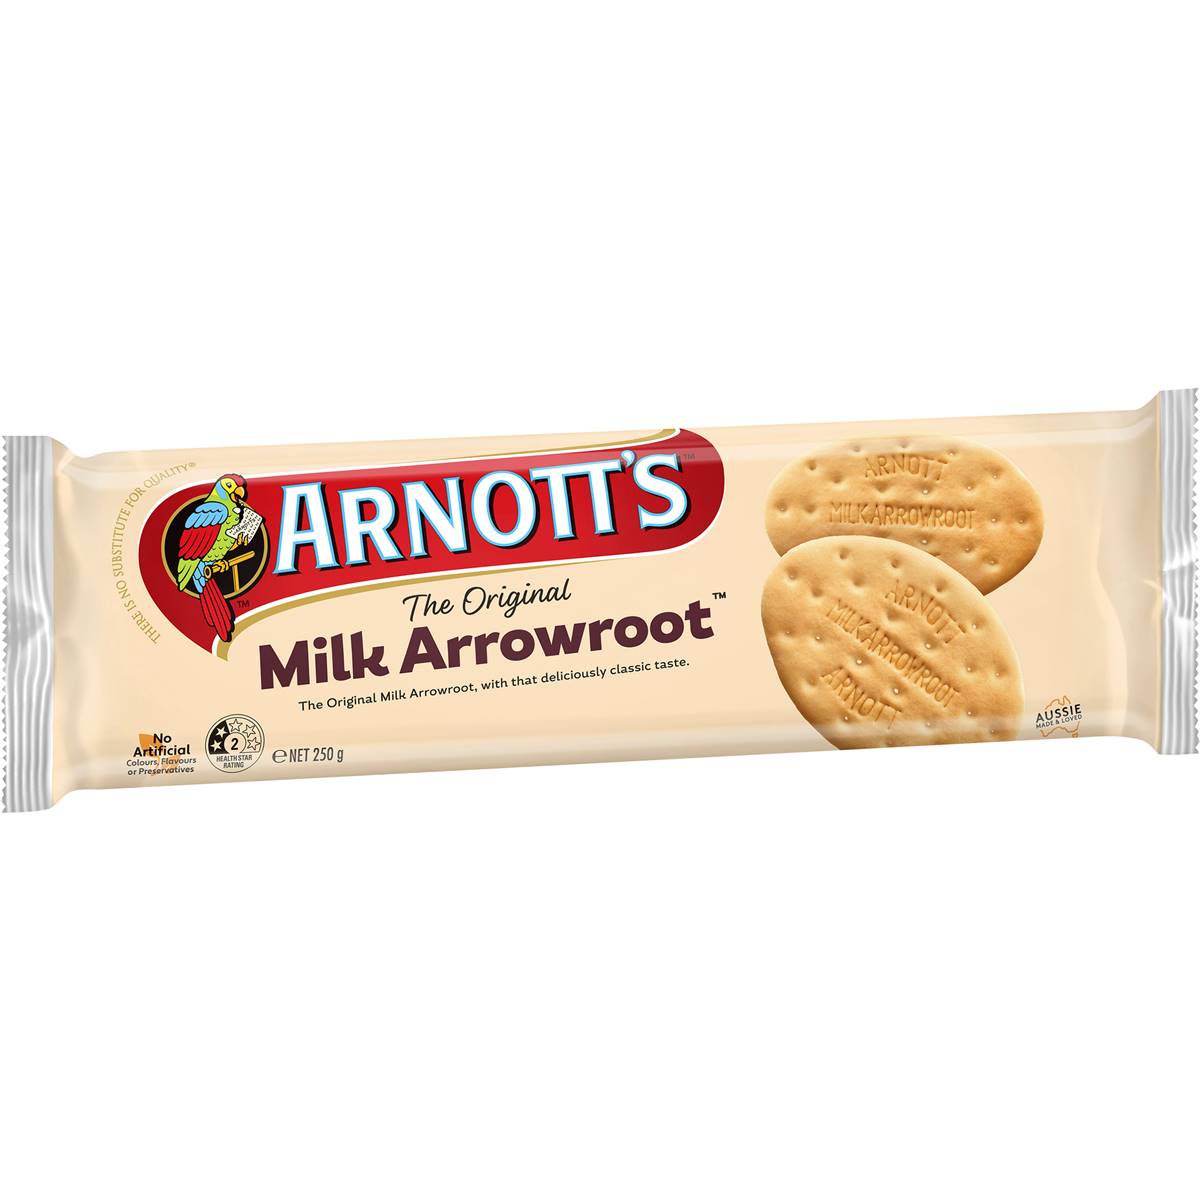 Calories In Arnotts Milk Arrowroot Plain Biscuits Calcount 5702